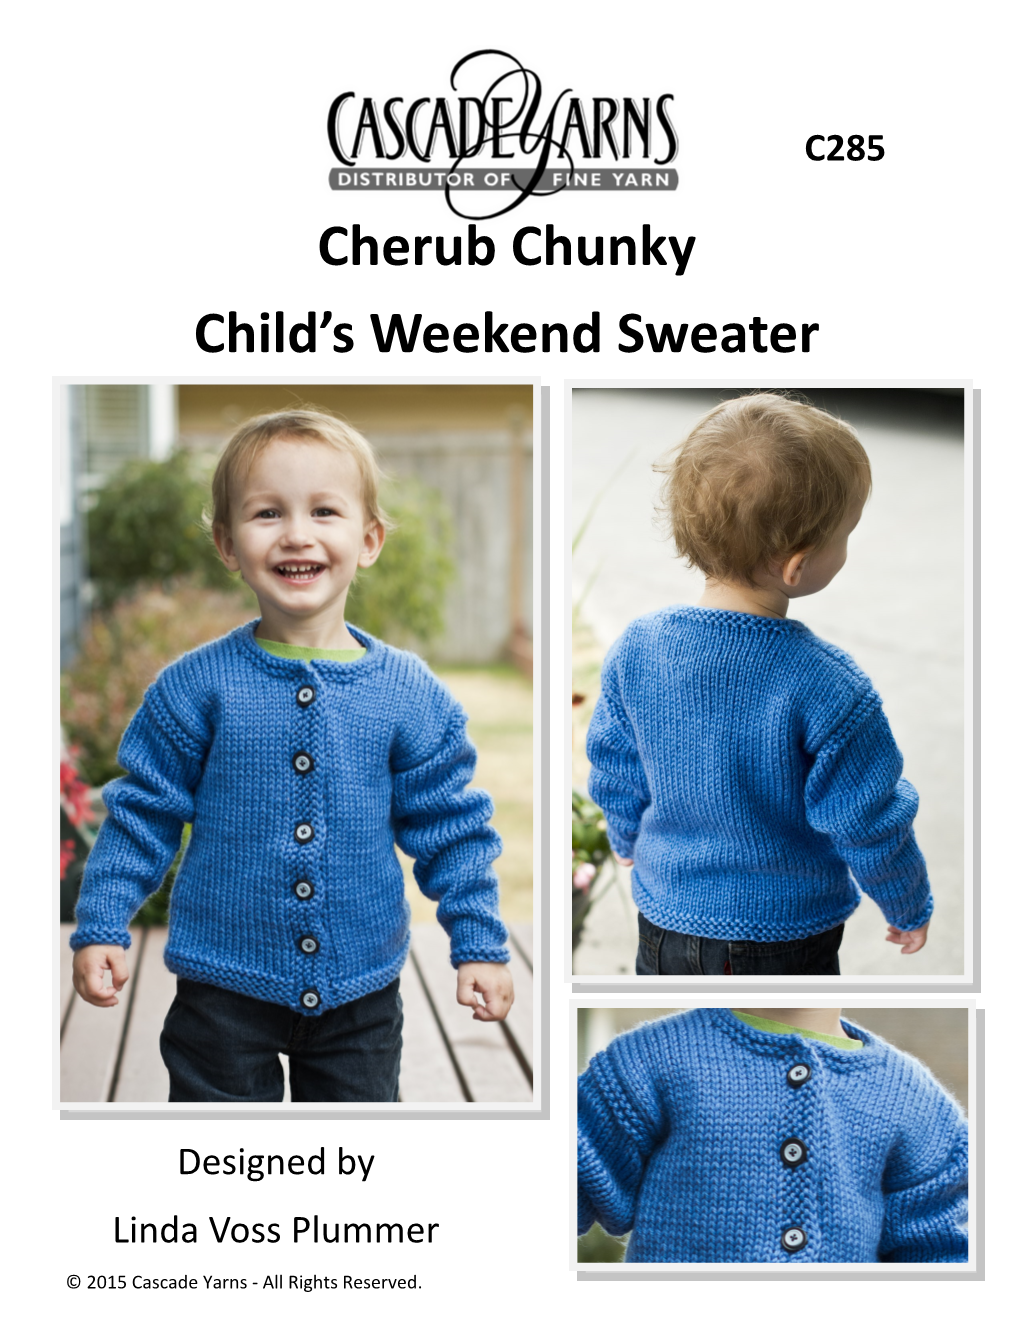 Cherub Chunky Child's Weekend Sweater